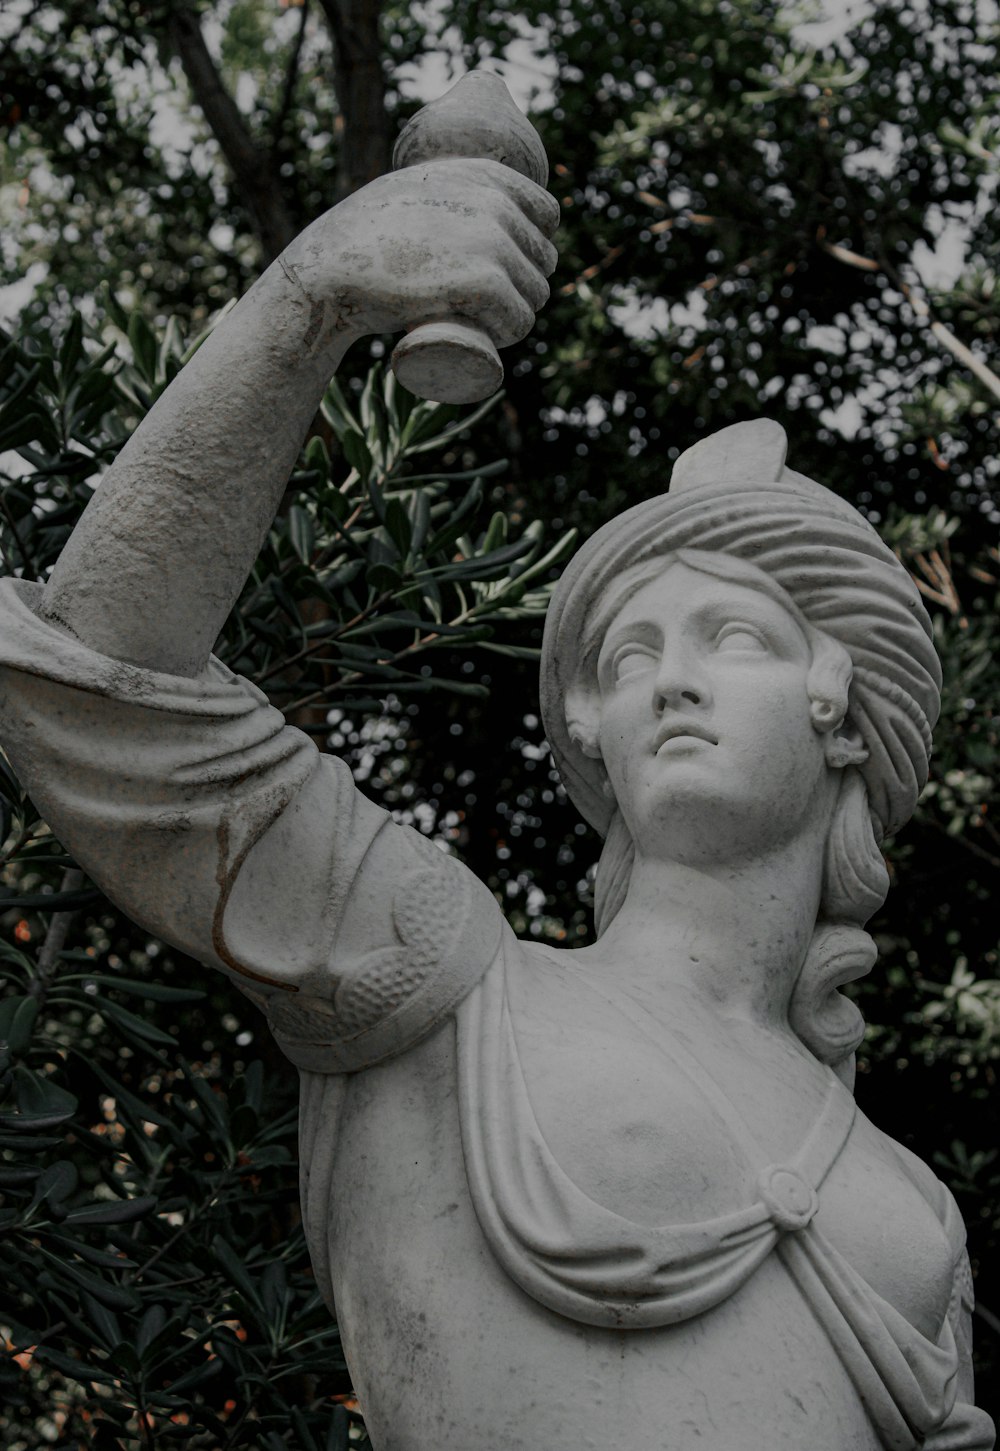 a statue of a woman holding a baseball bat